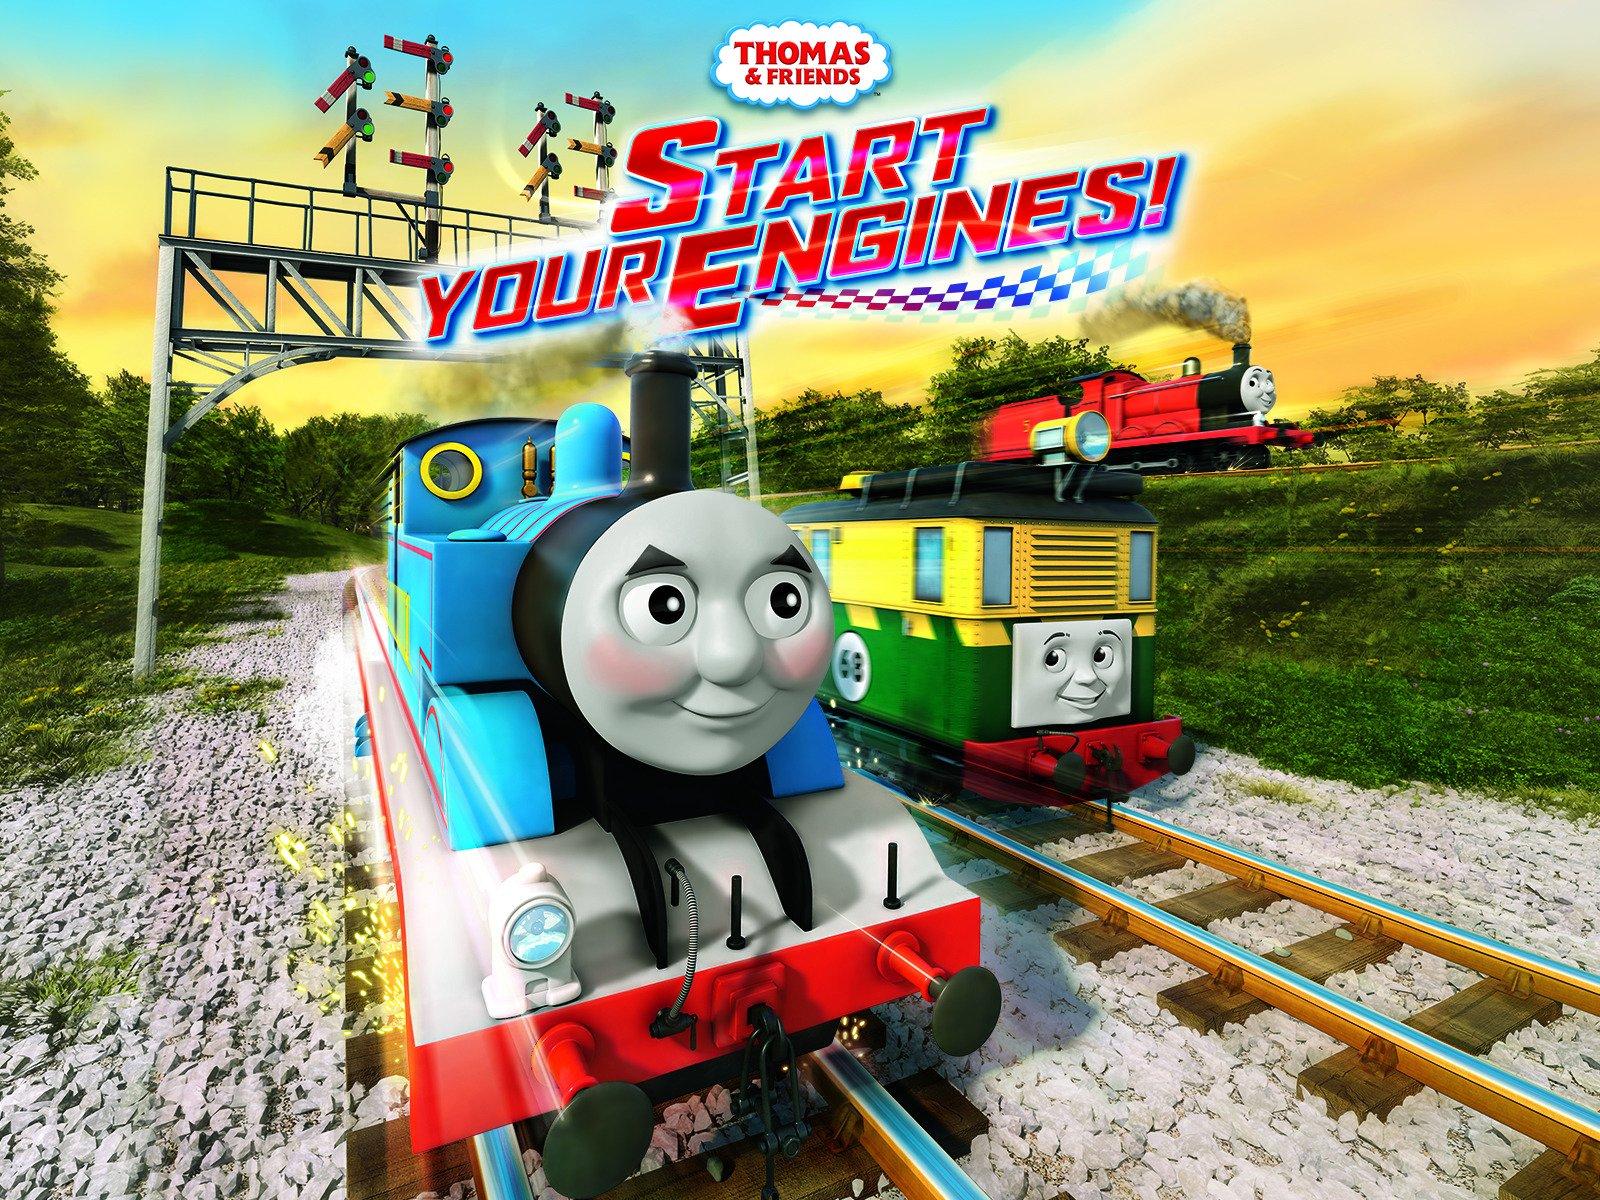 Amazon.co.uk: Watch Thomas & Friends: Start Your Engines